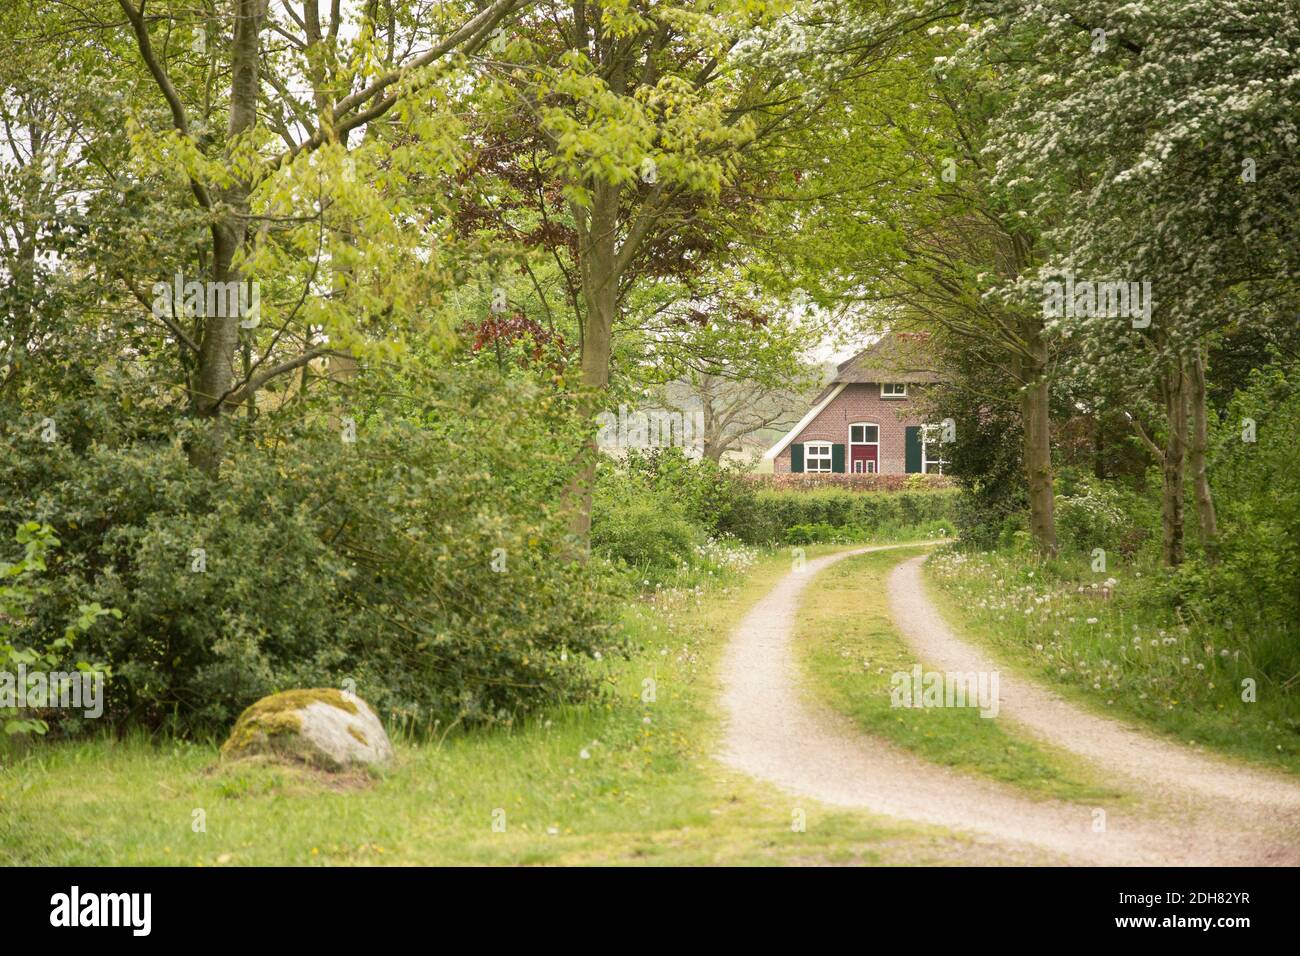 access to a farm house, Netherlands, Twente Stock Photo